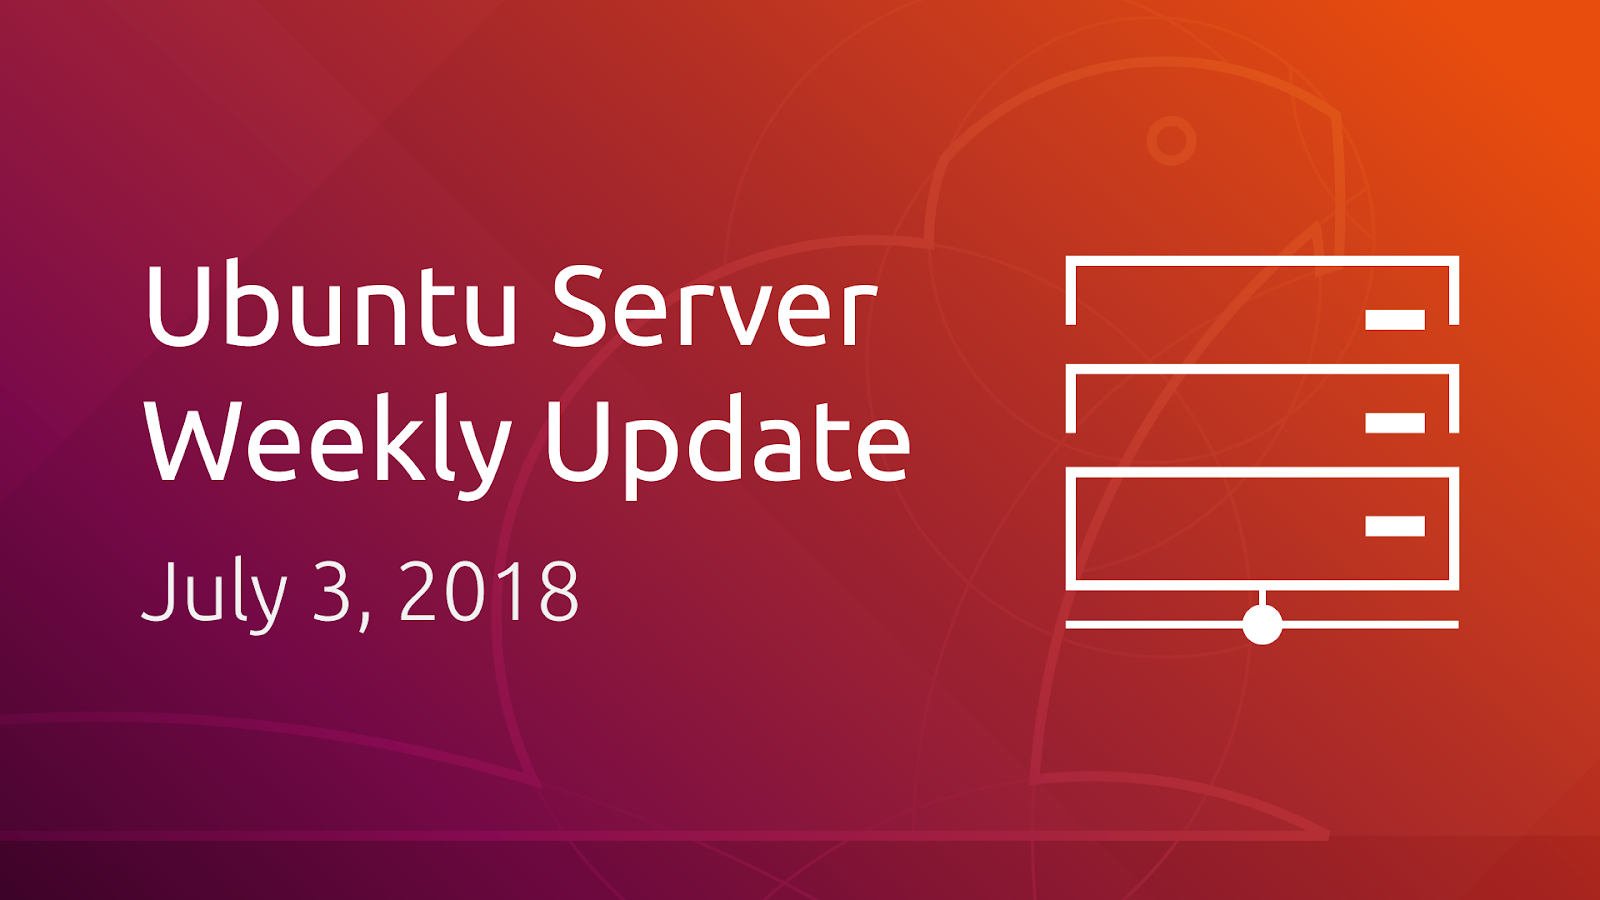 istat server ubuntu